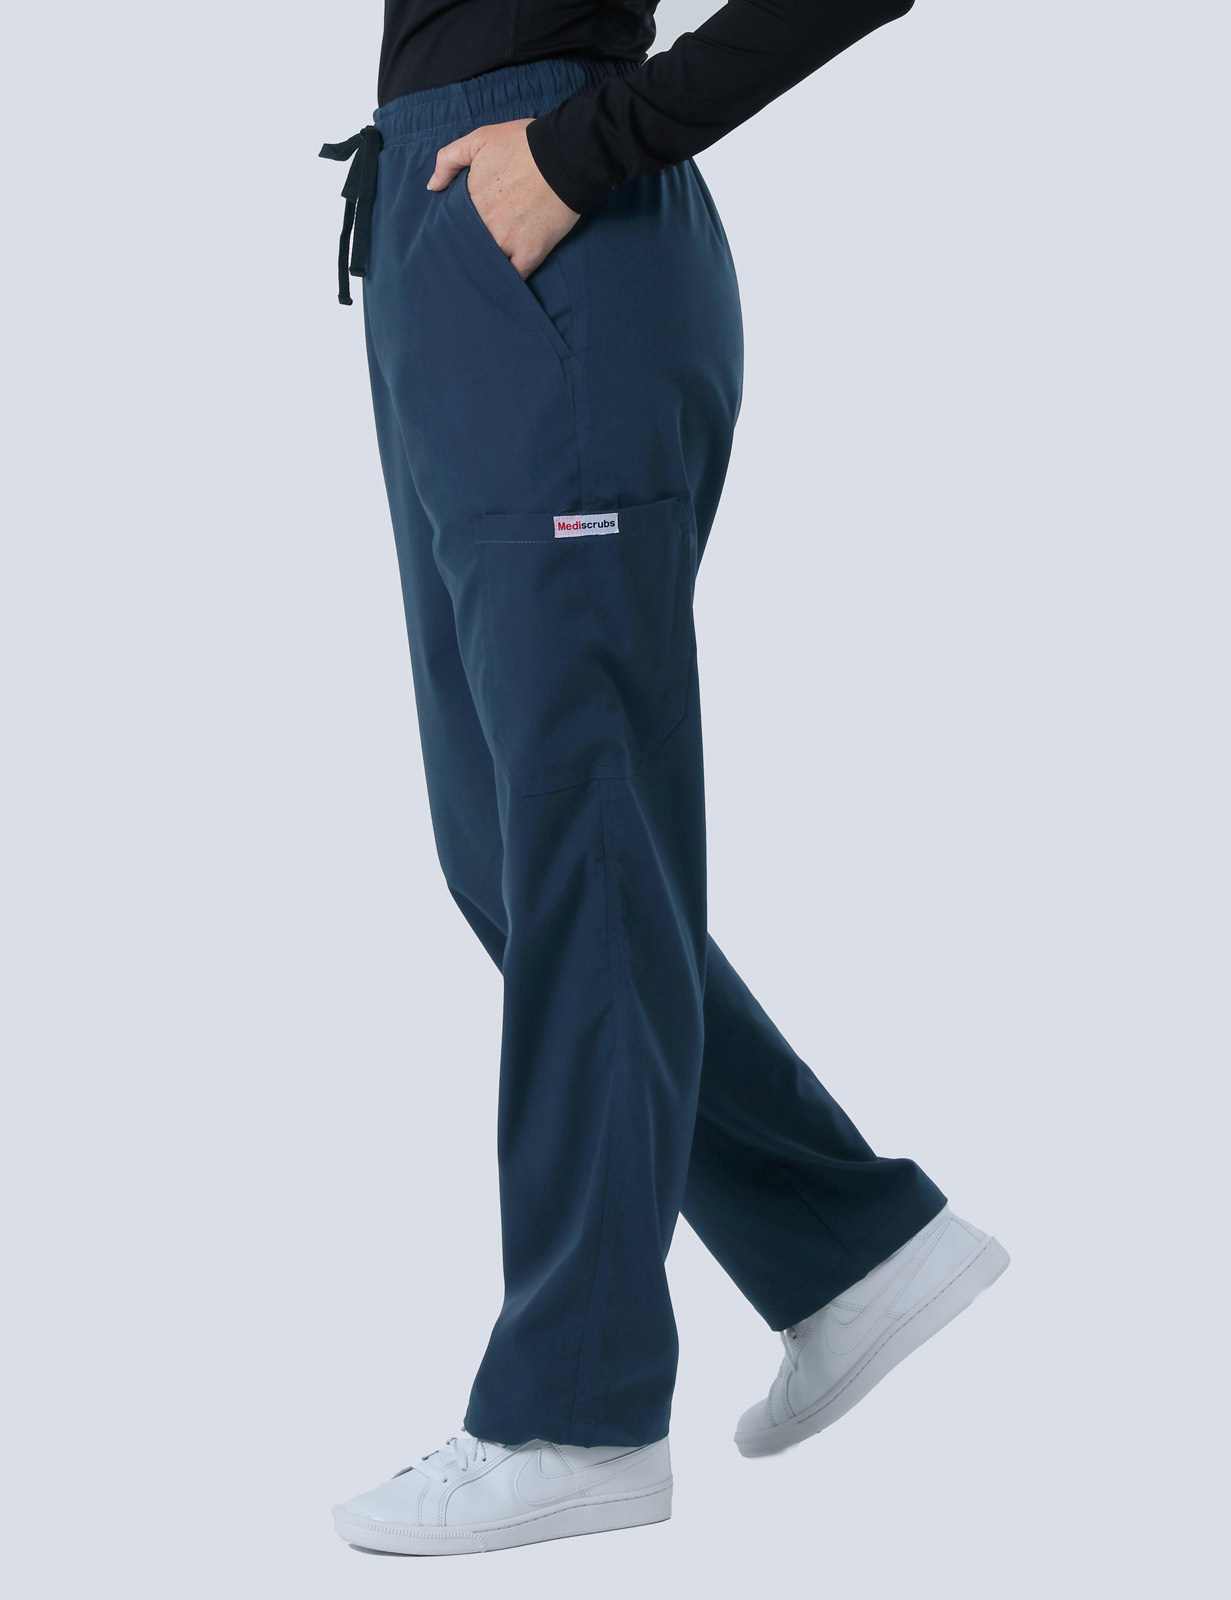 Ipswich Hospital Cardiac Care Unit Uniform Set Bundle (4 Pocket Top and Cargo Pants in Navy + 3 Logos)